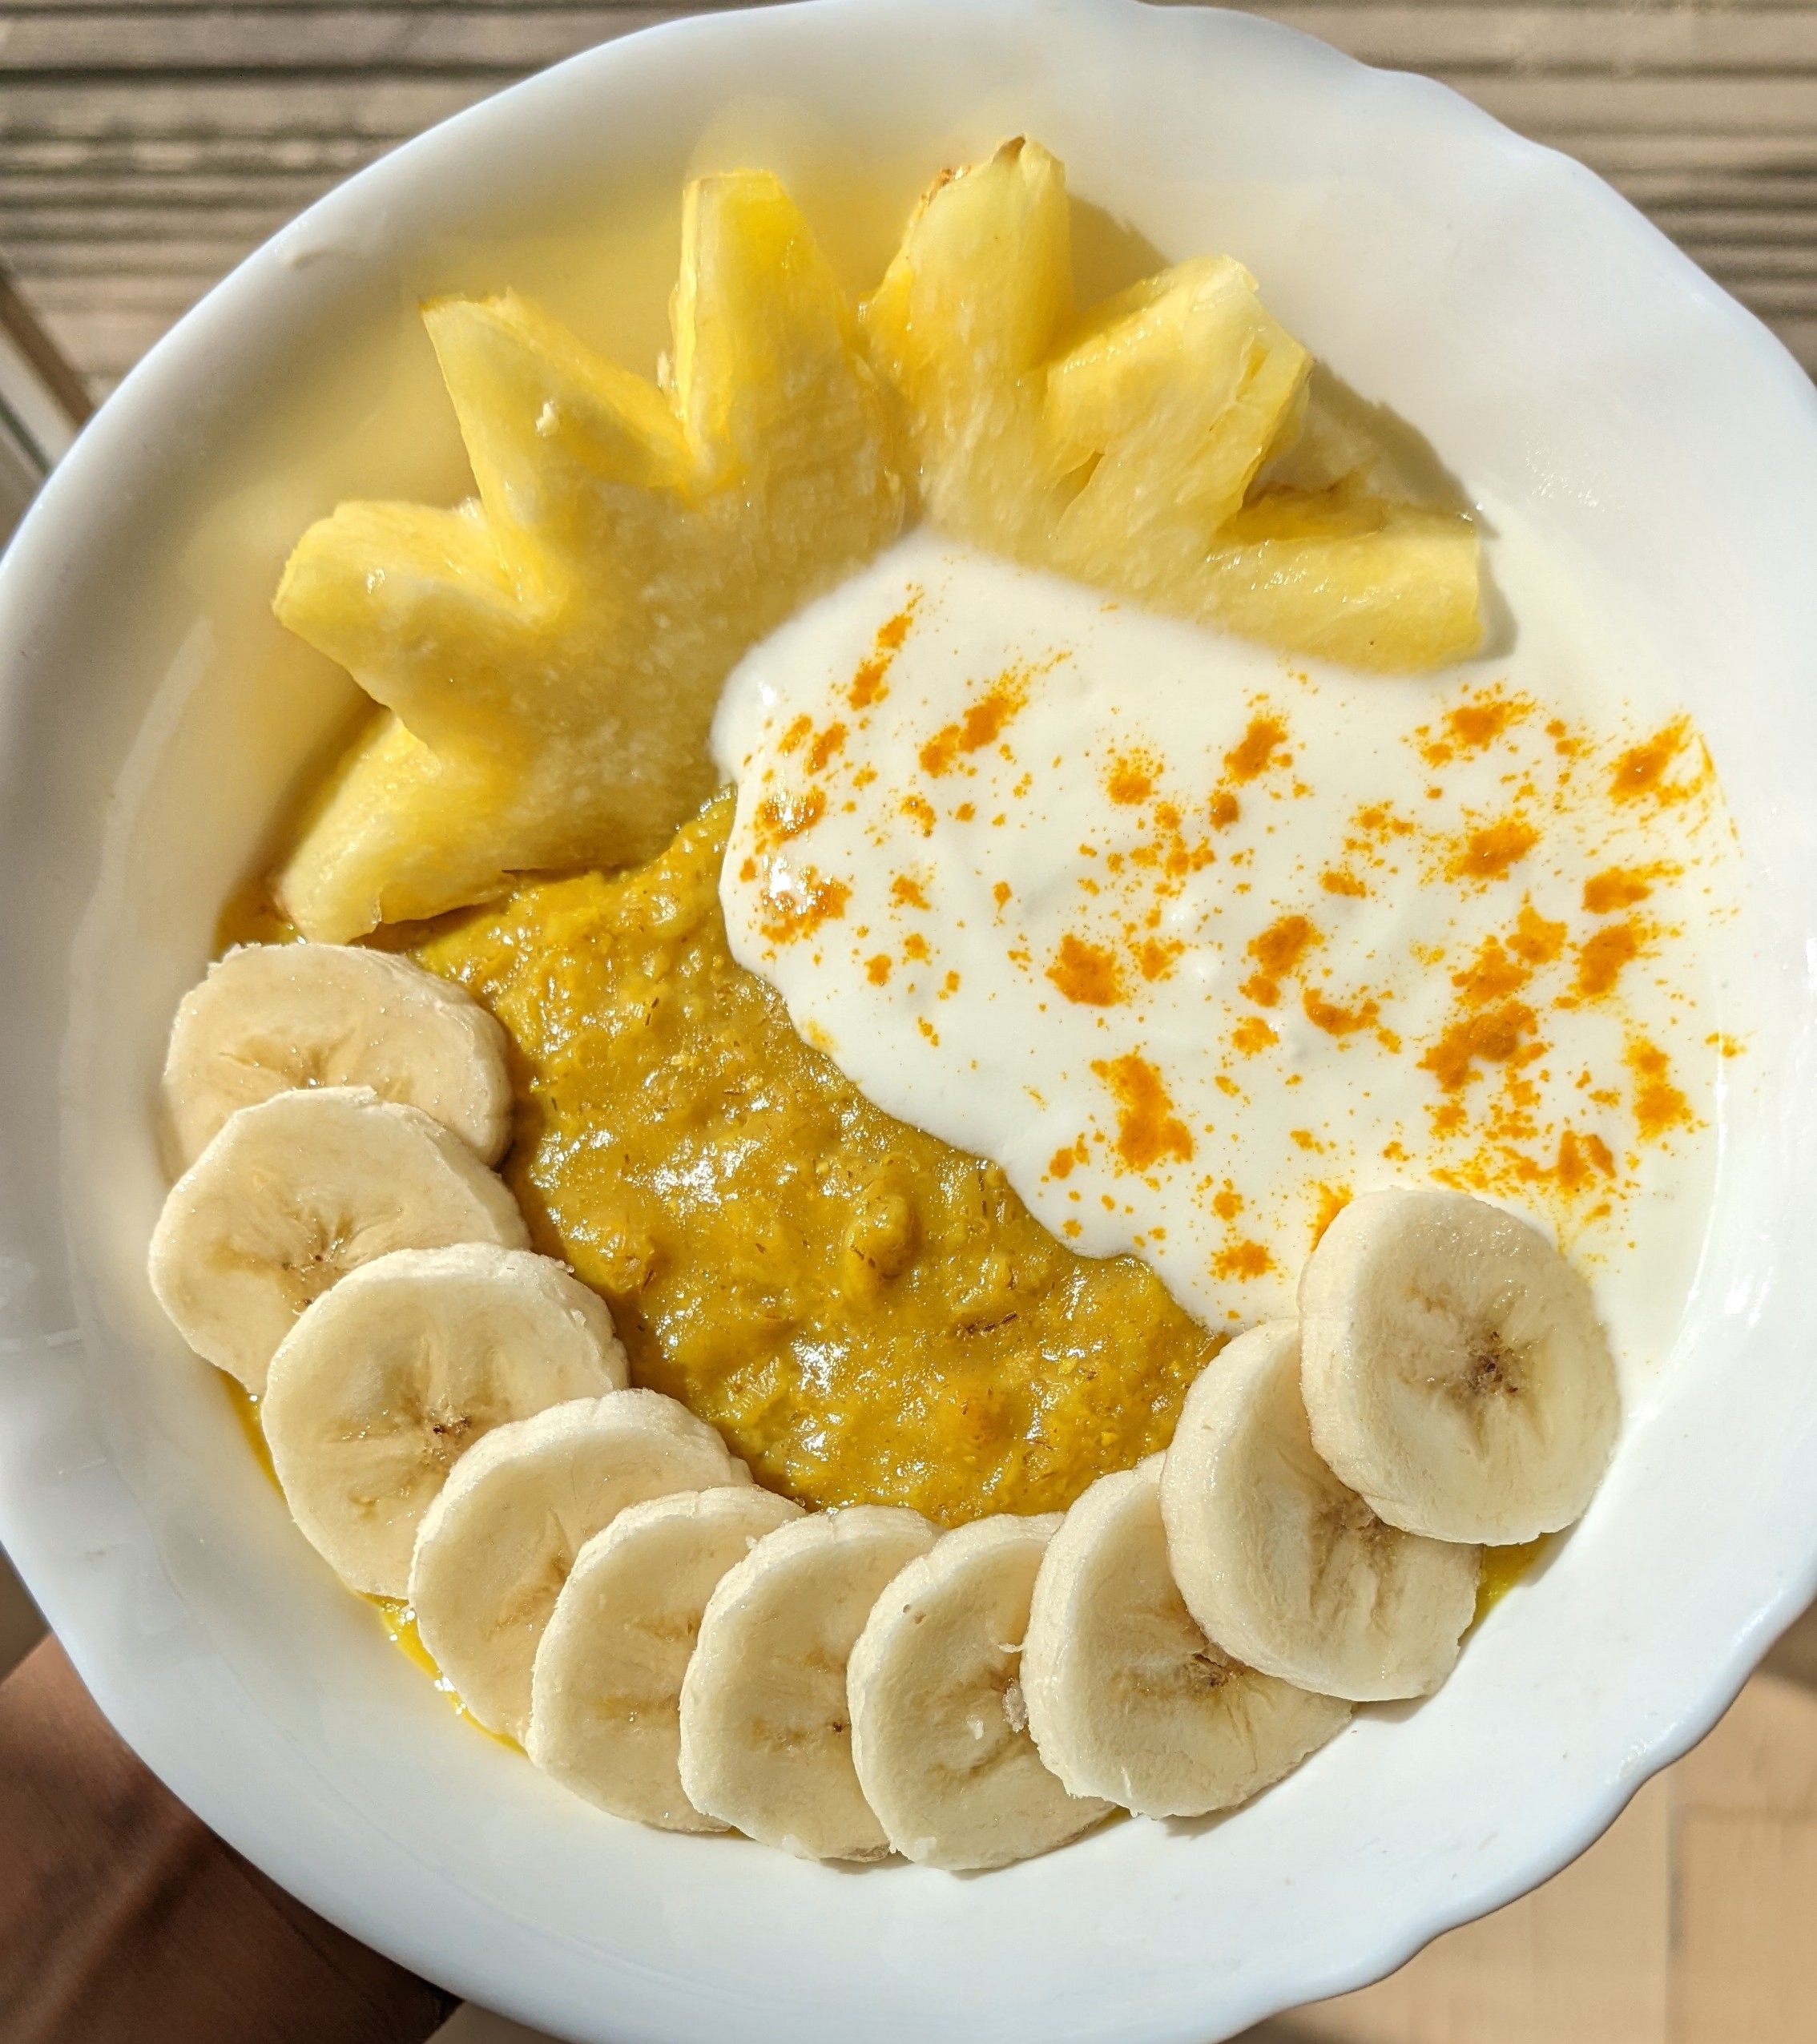 warm-turmeric-oats-with-yoghurt-banana-and-pineapple-breakfast-recipes-breakfast-bowls-yoghurt-bowls-oatmeal-banana-recipes-vegan-recipes-vegetarian-recipes